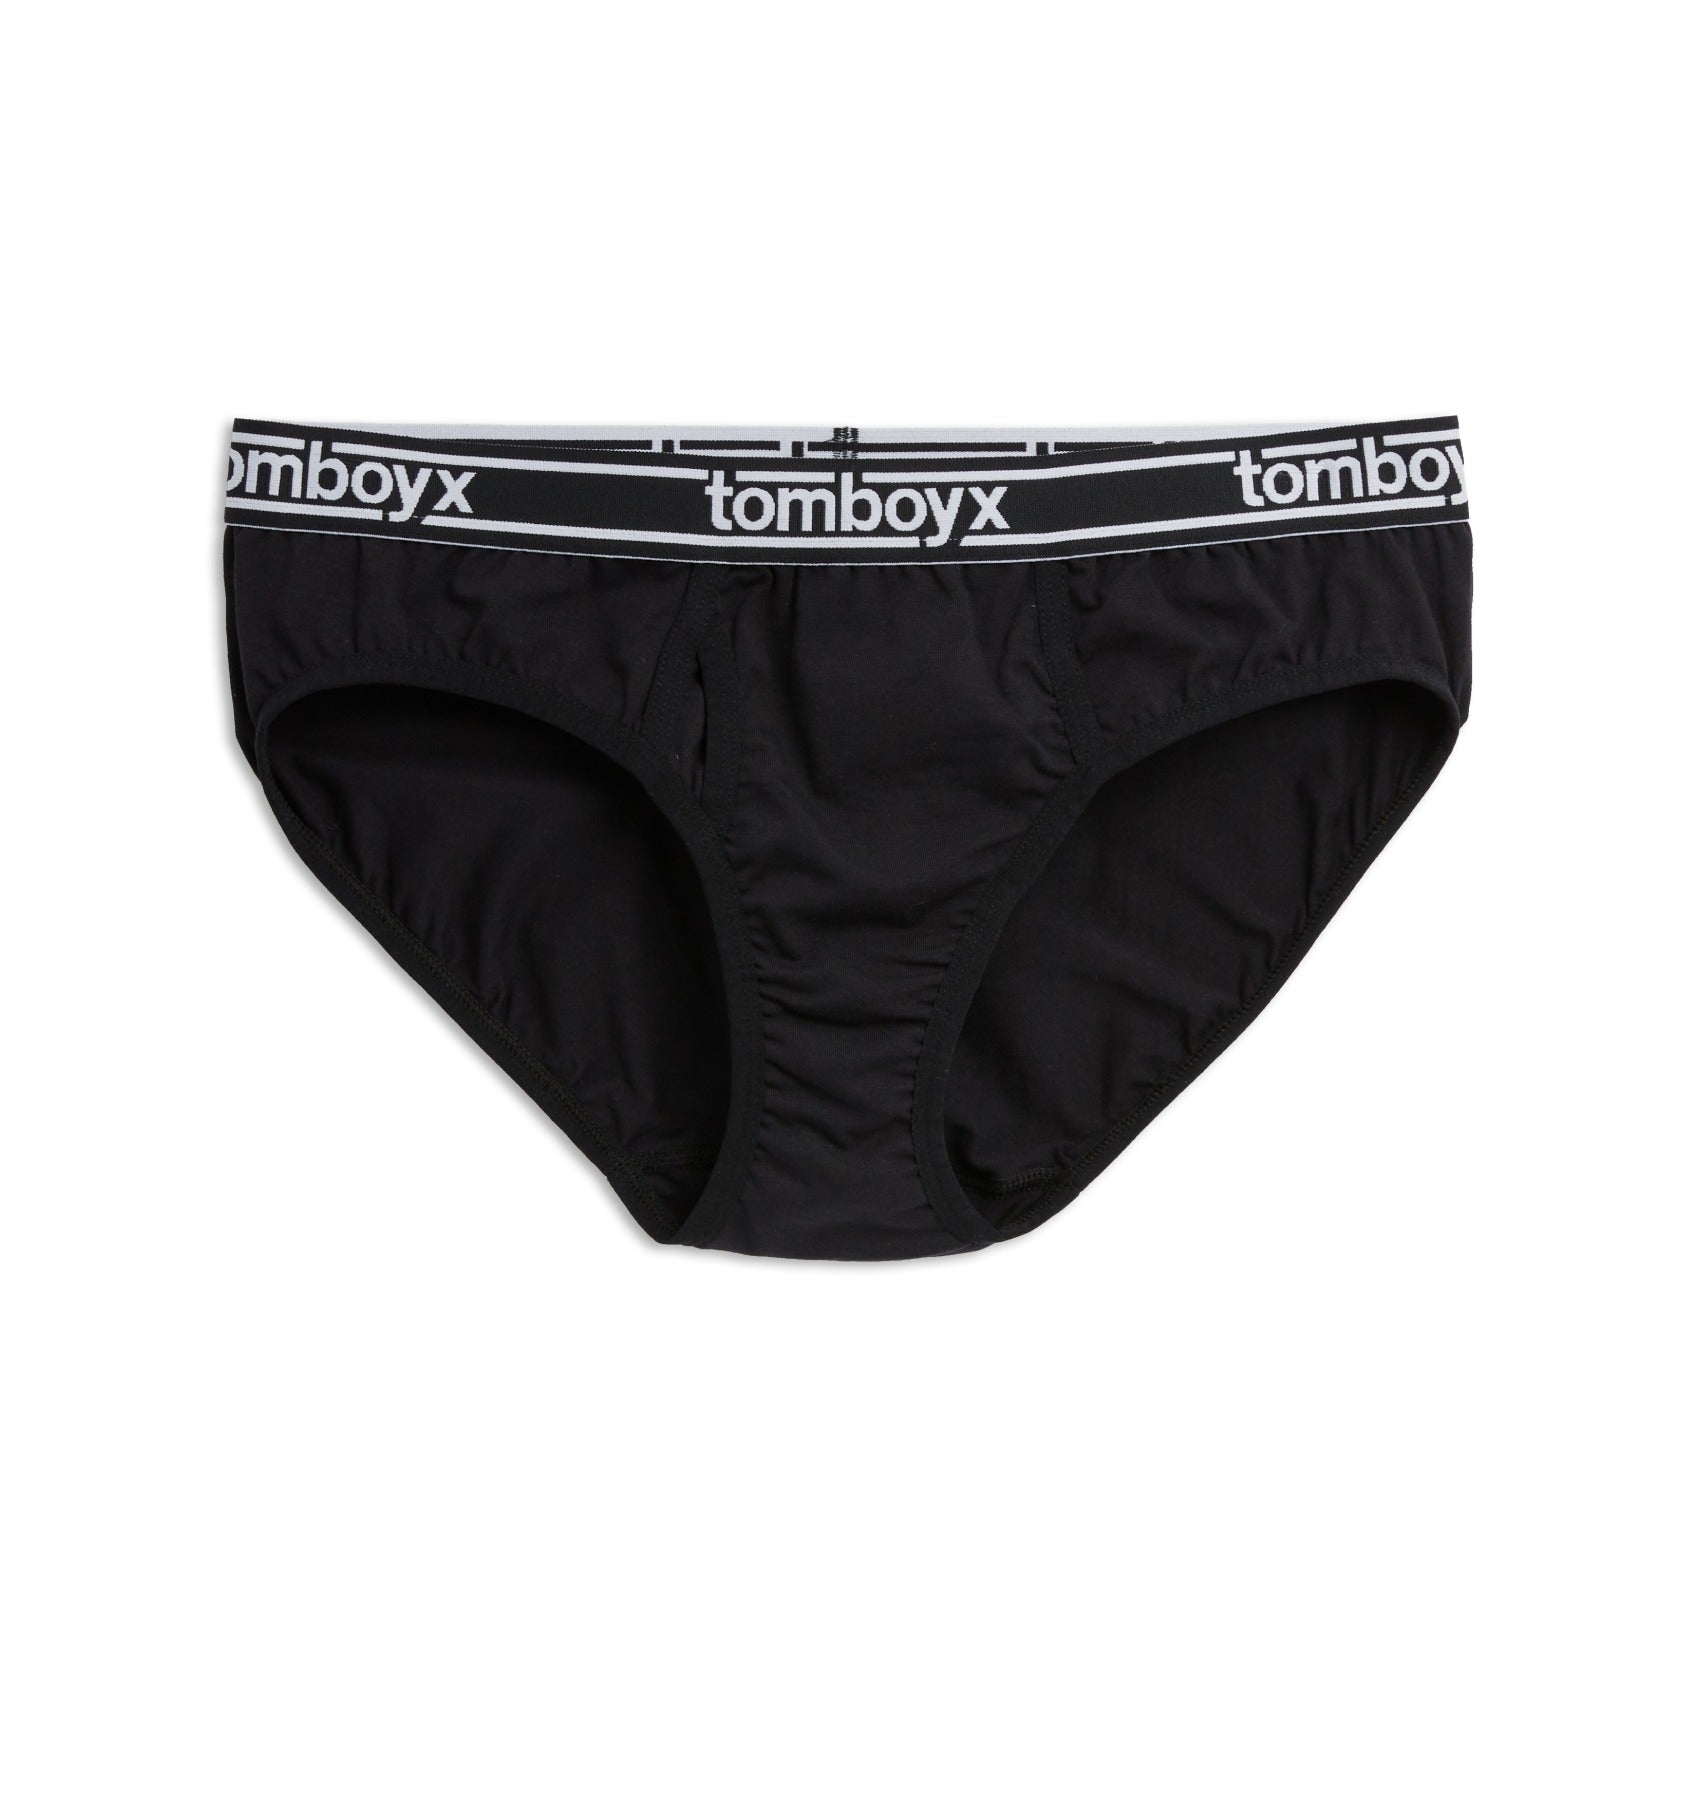 TomboyX Iconic Briefs, Super Soft Cotton Form-Fitting Underwear